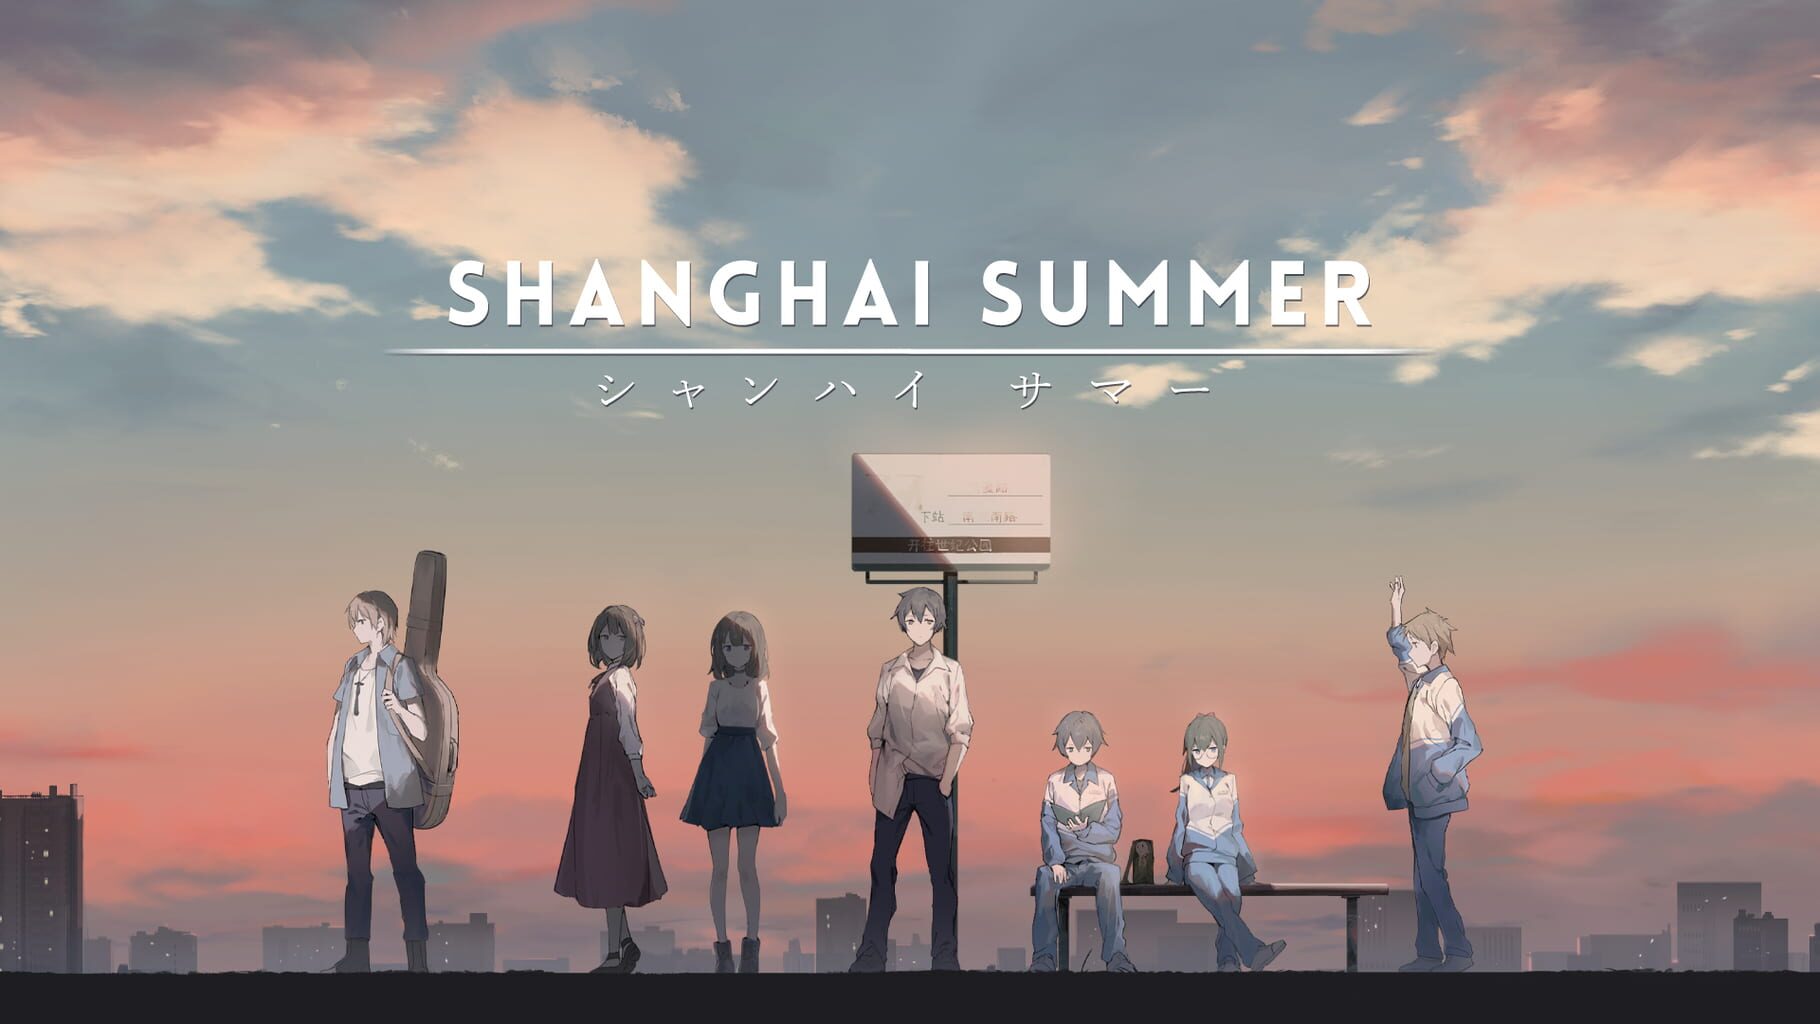 Shanghai Summer artwork